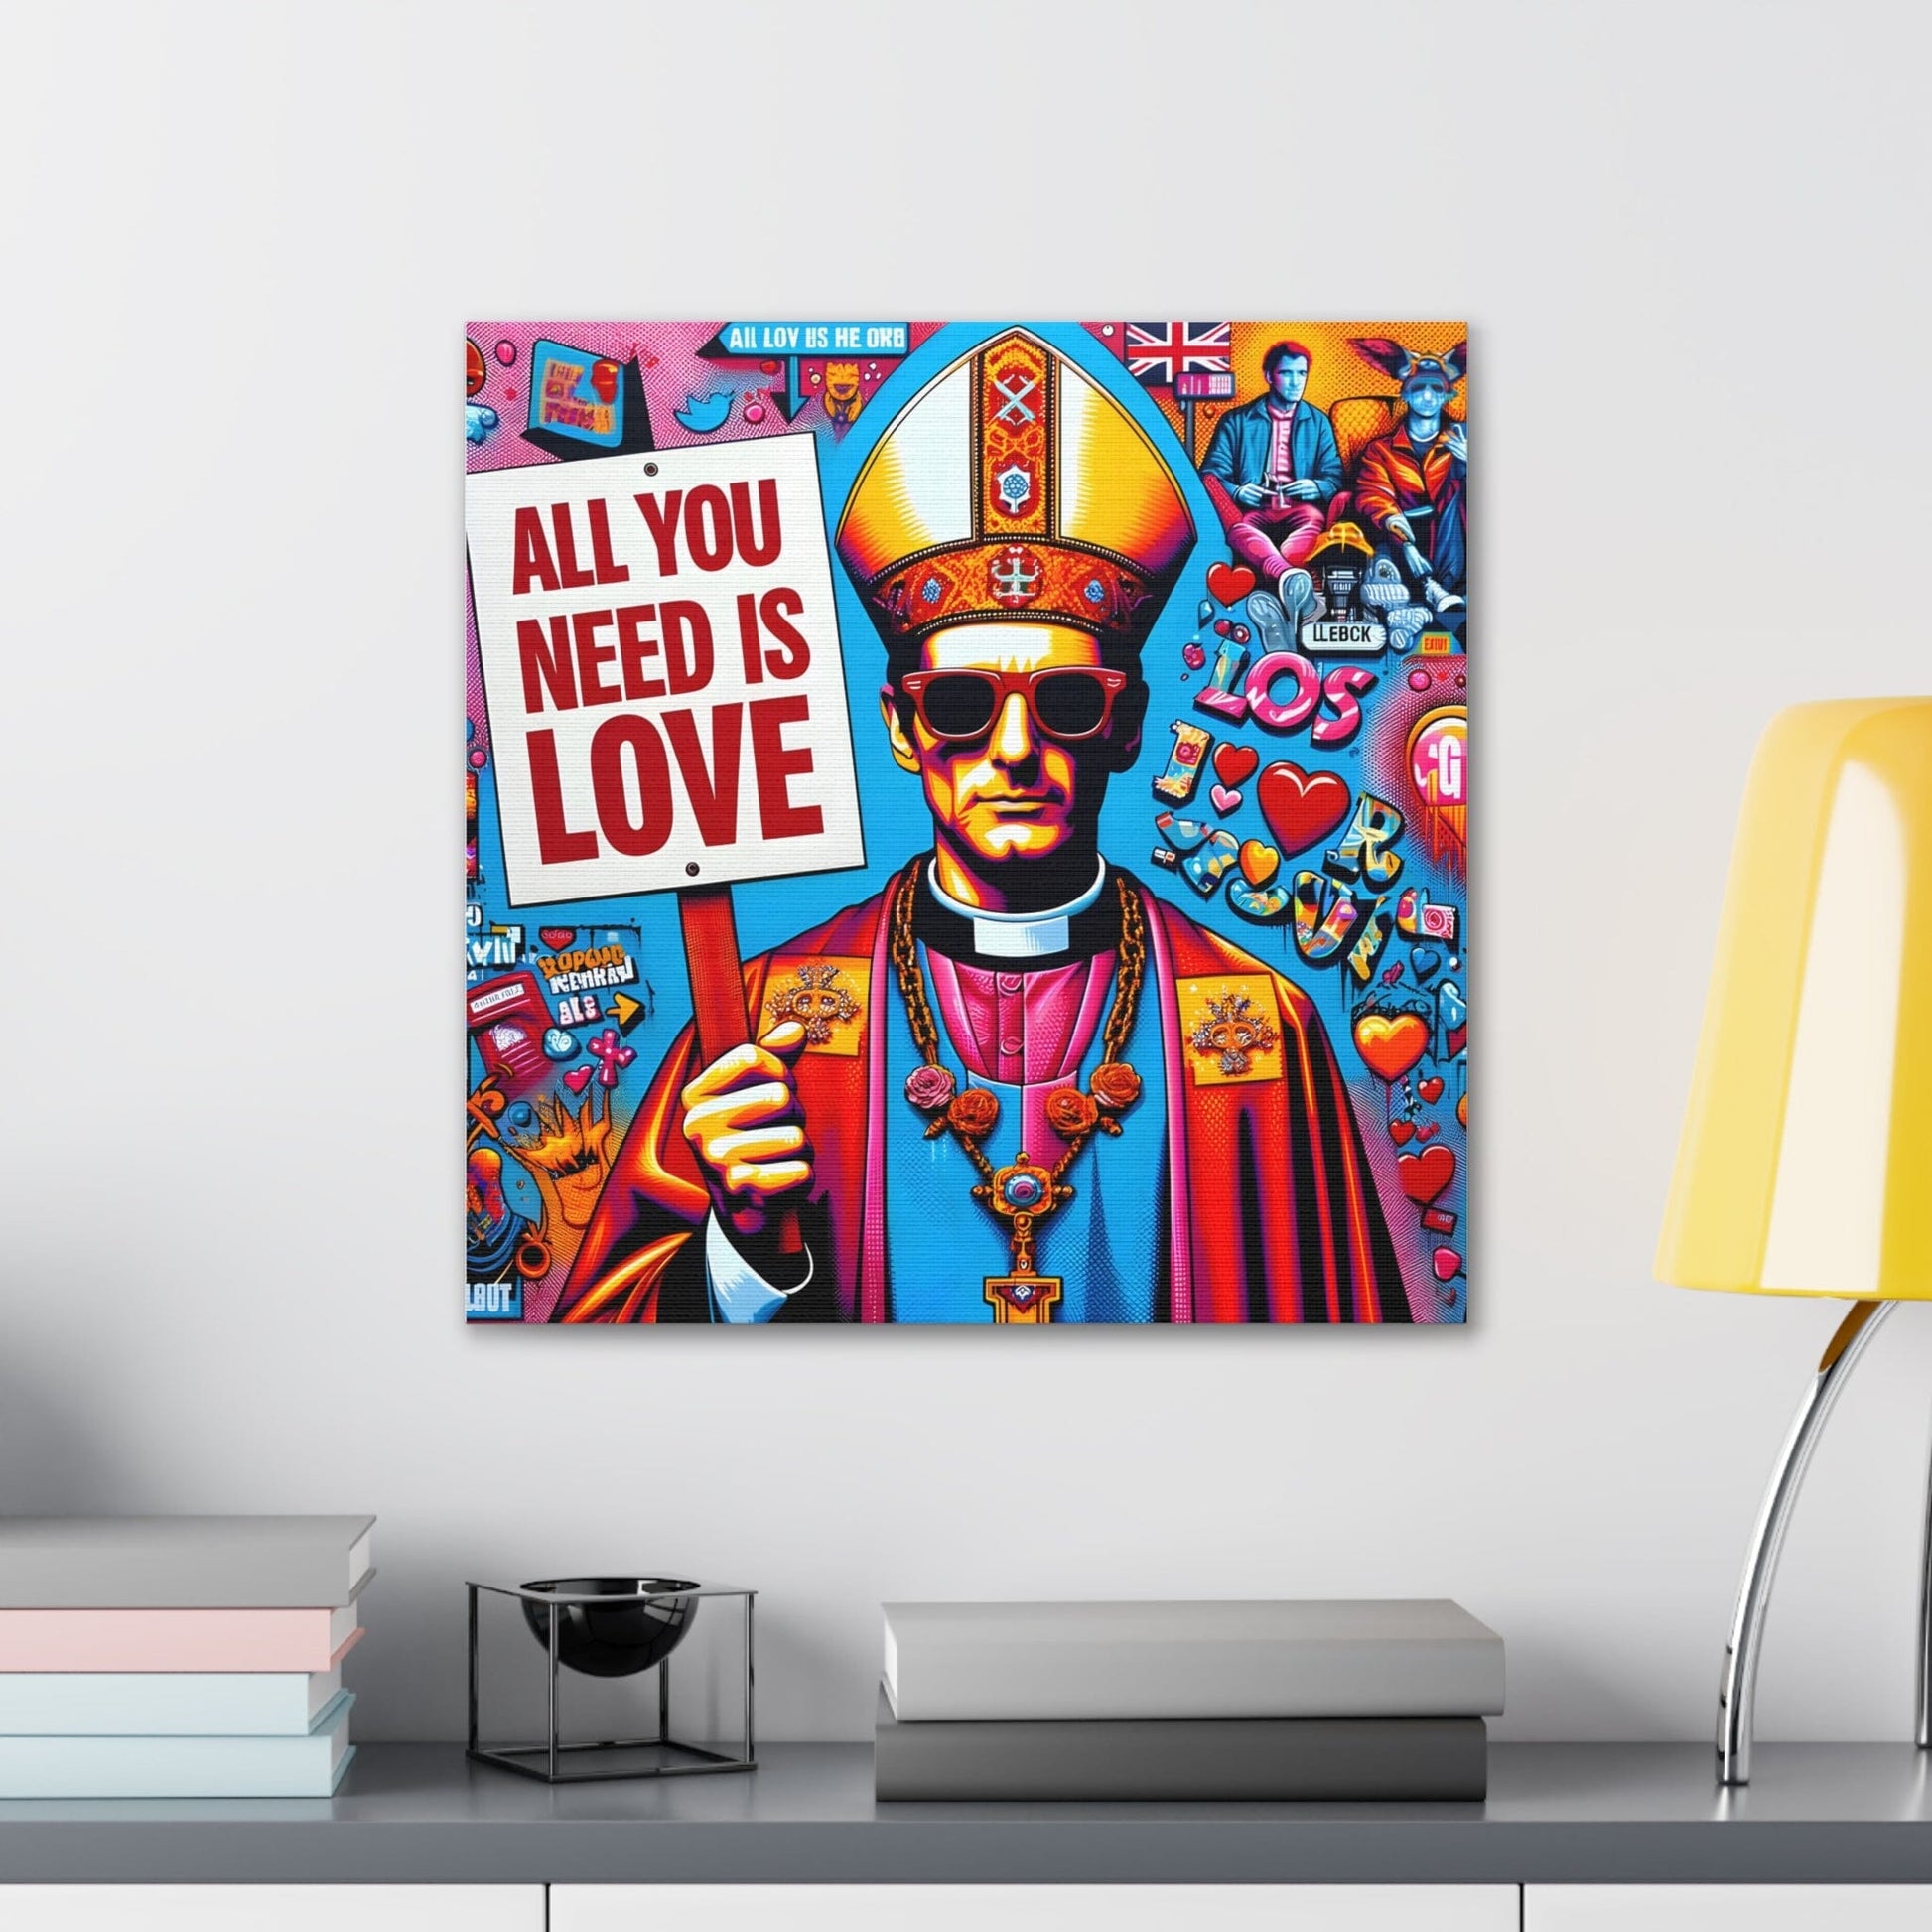 Julian Ardley. Bishop's Benediction: Irony Edition. Exclusive Graphic Canvas Print